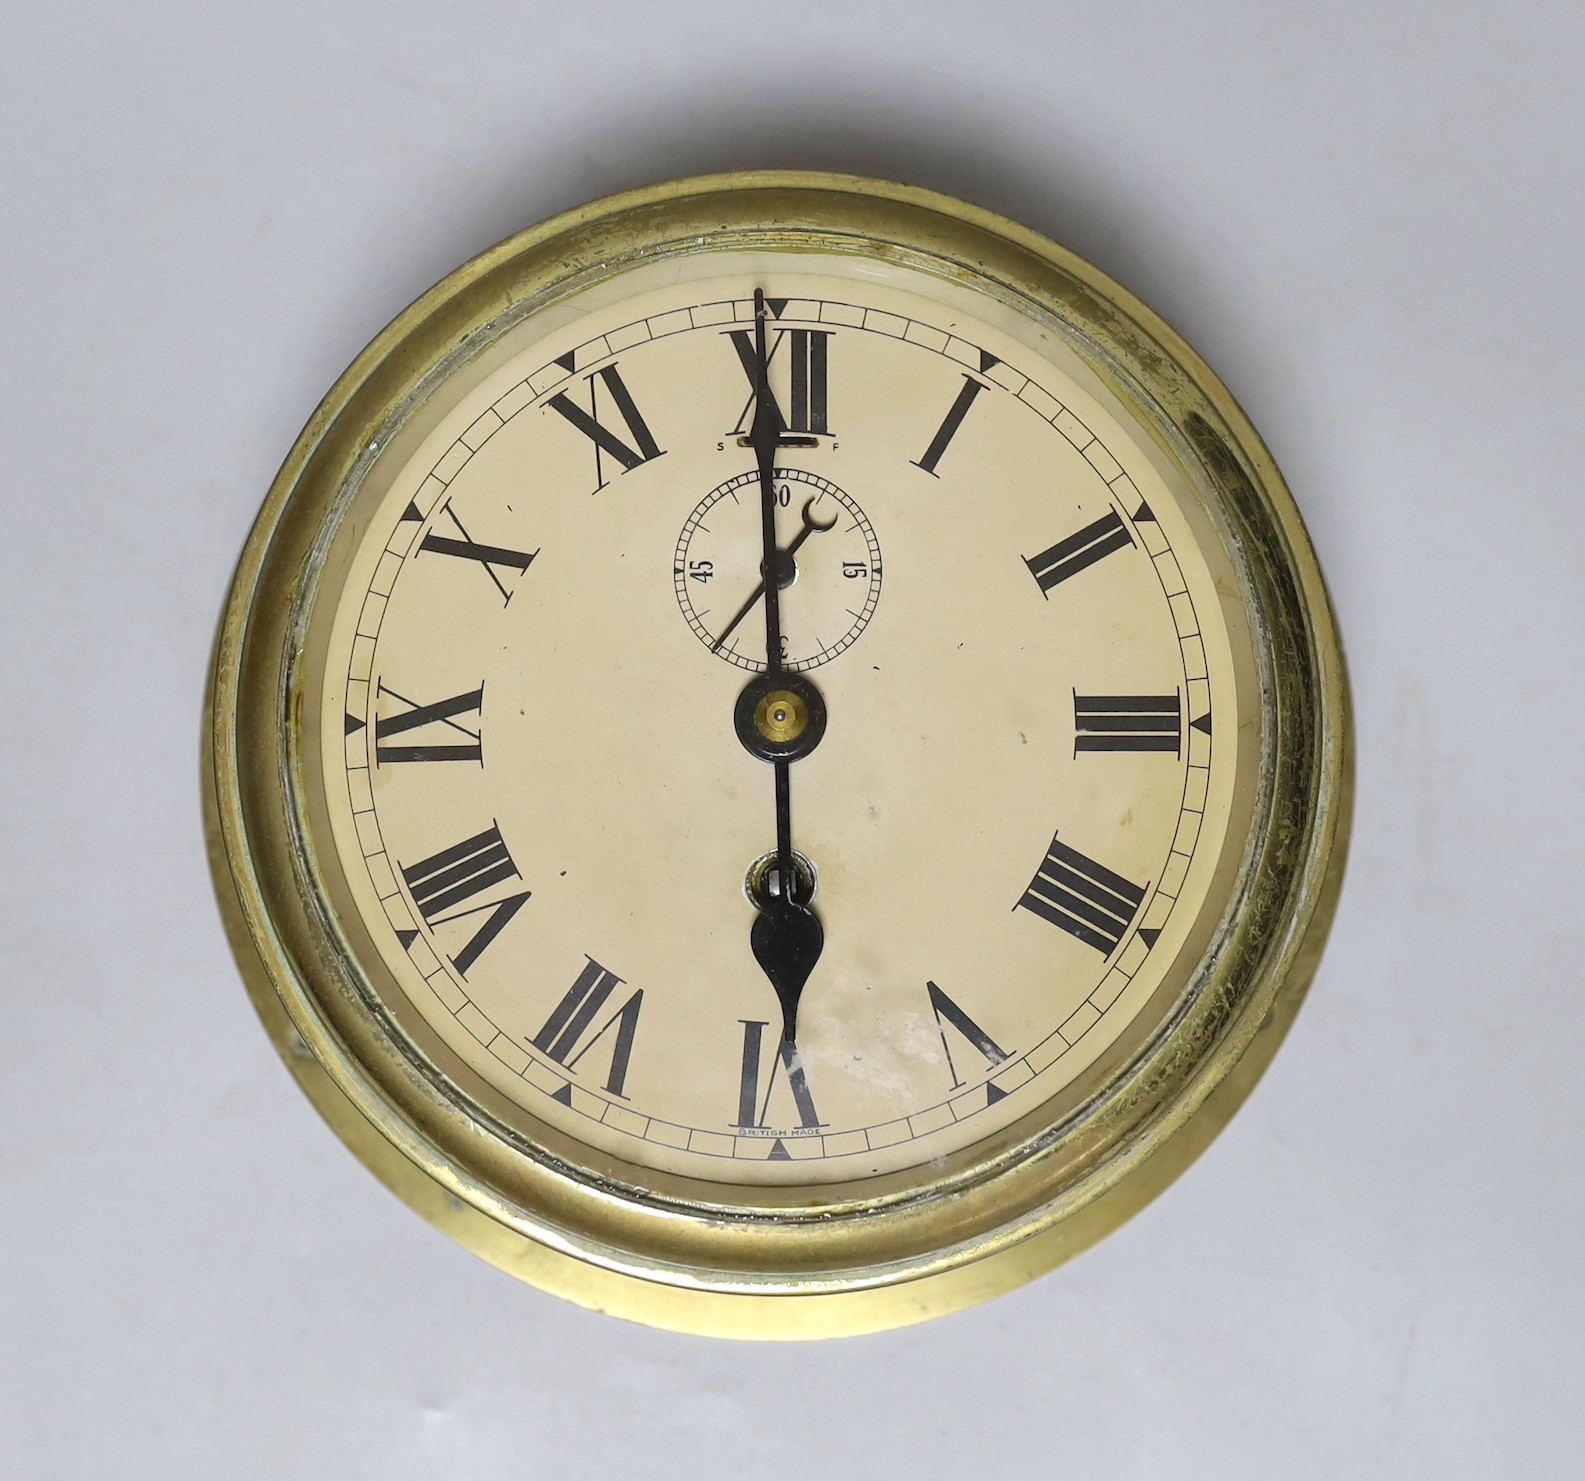 A ship's clock, made by Elliot Ltd Croydon, back plate 20.5cm diameter